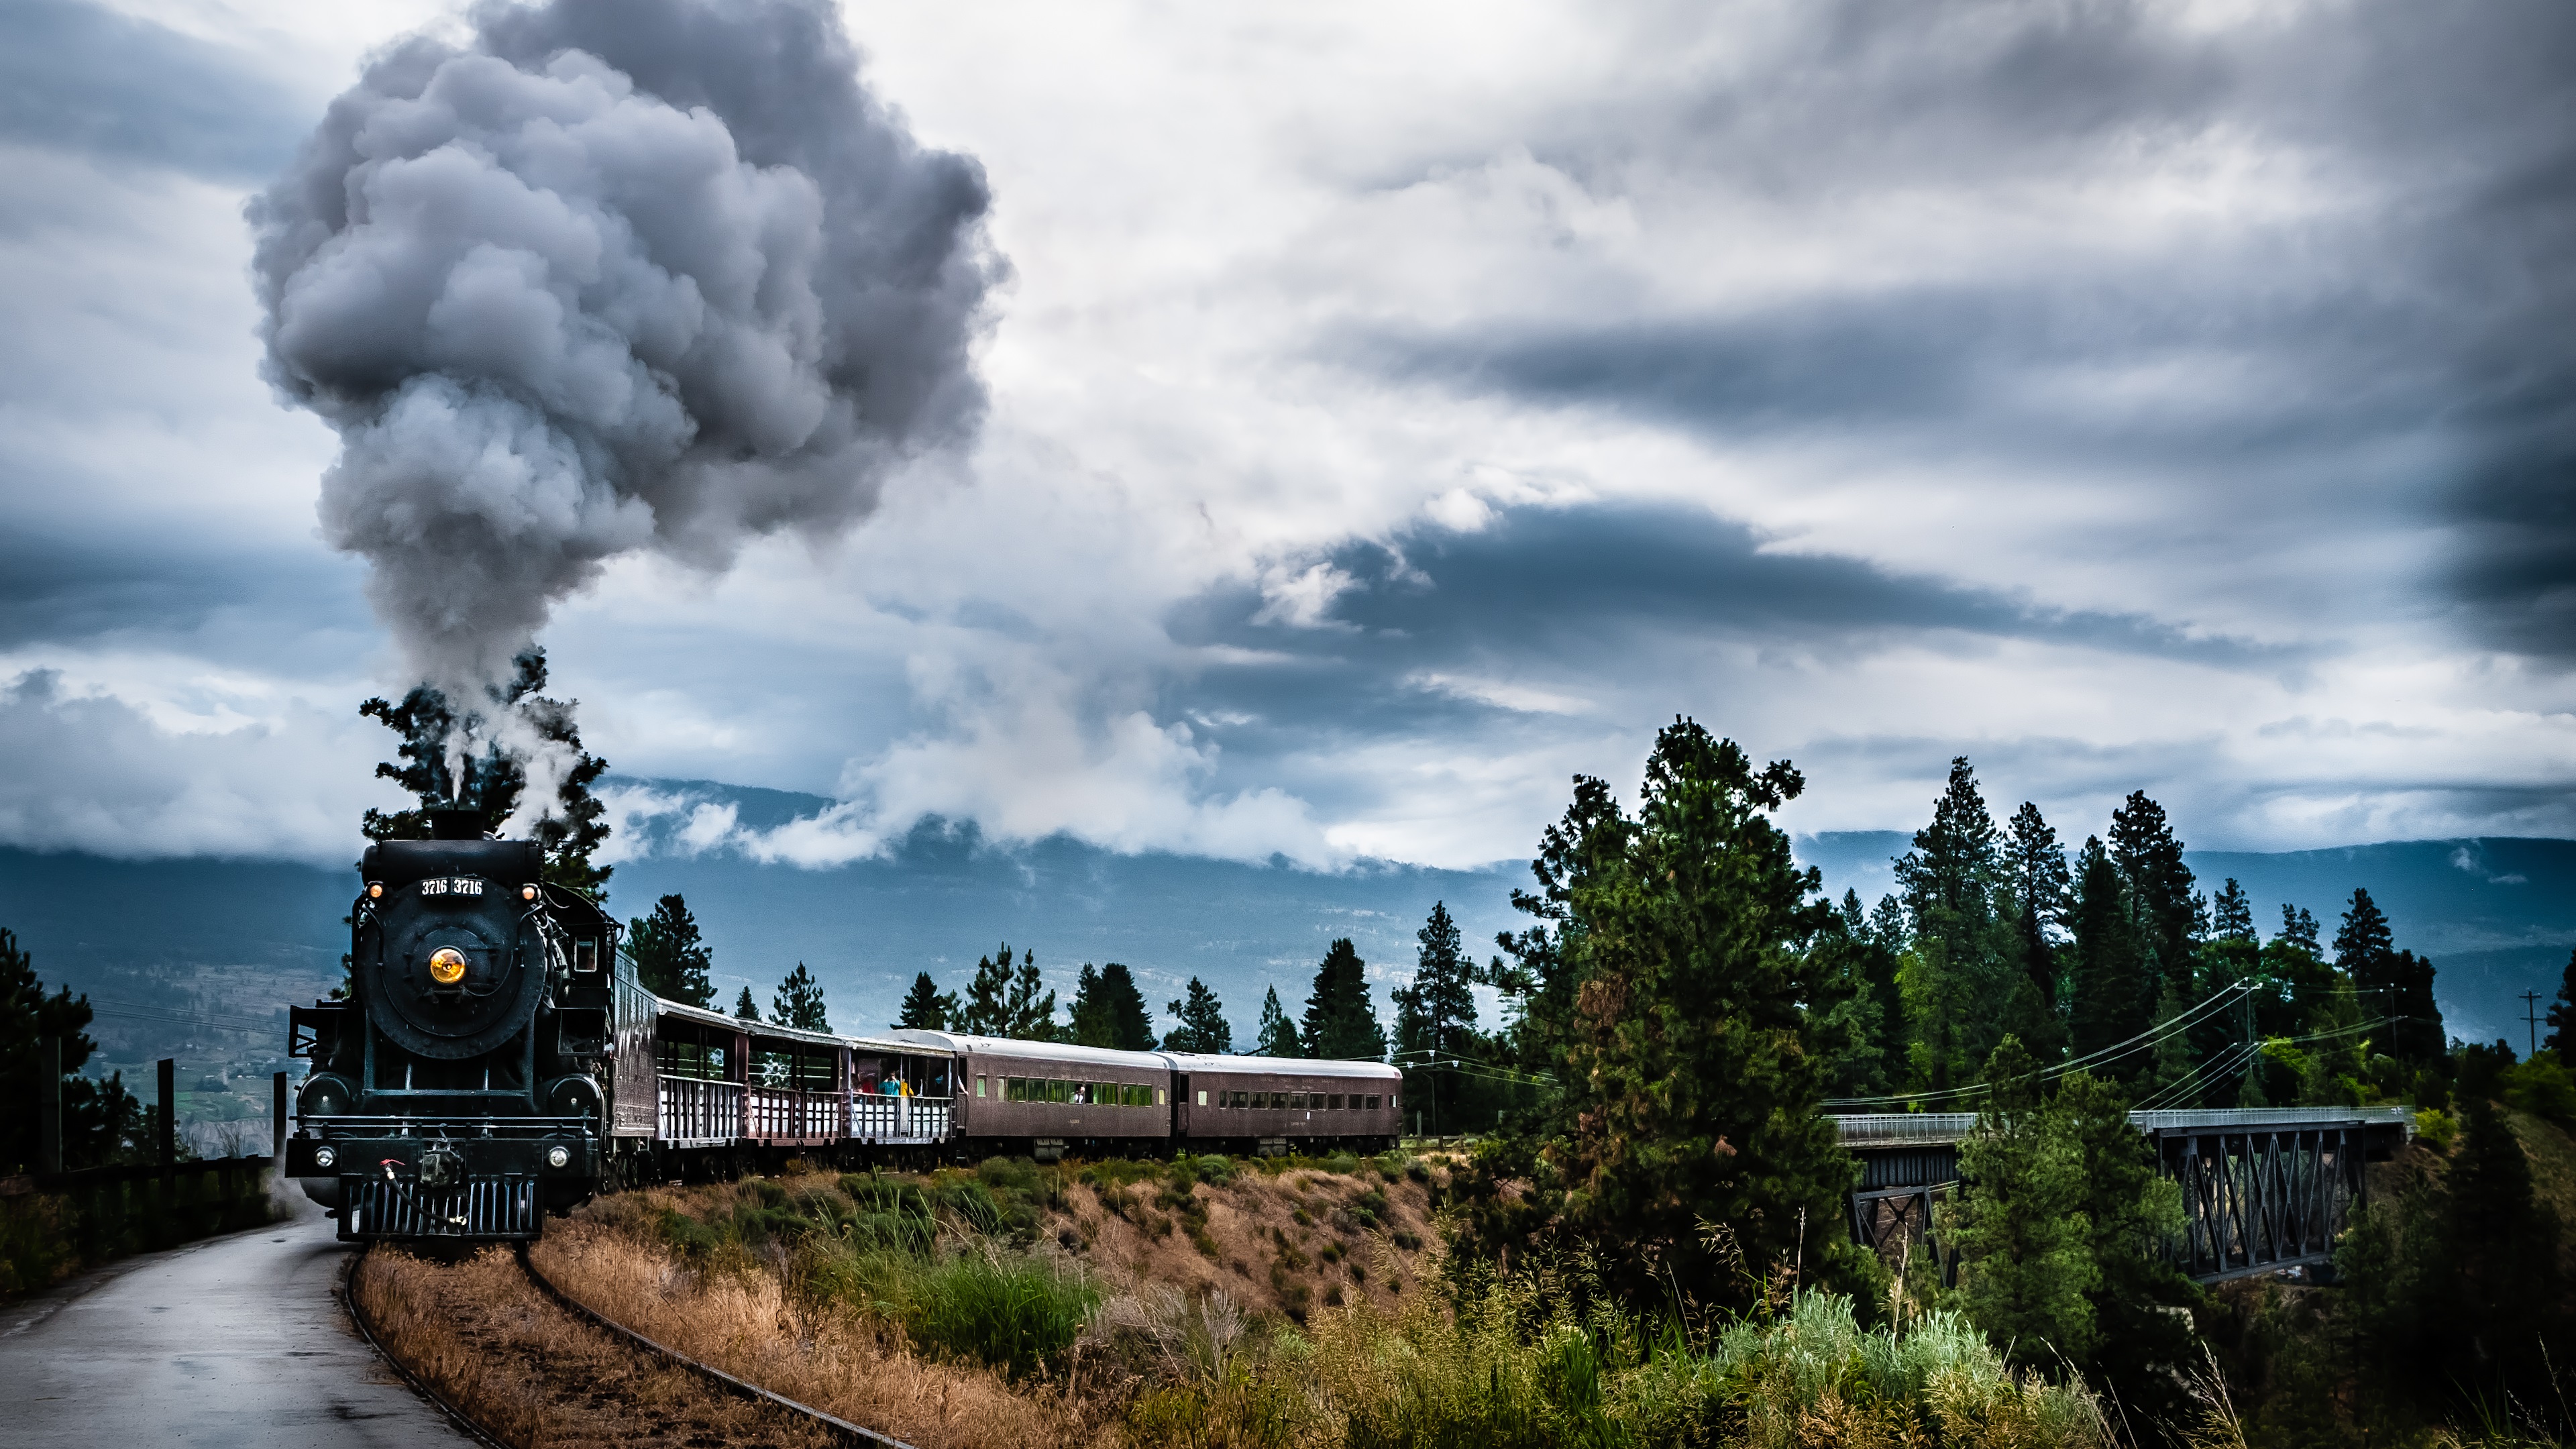 vehicles, hdr, cloud, train, railroad